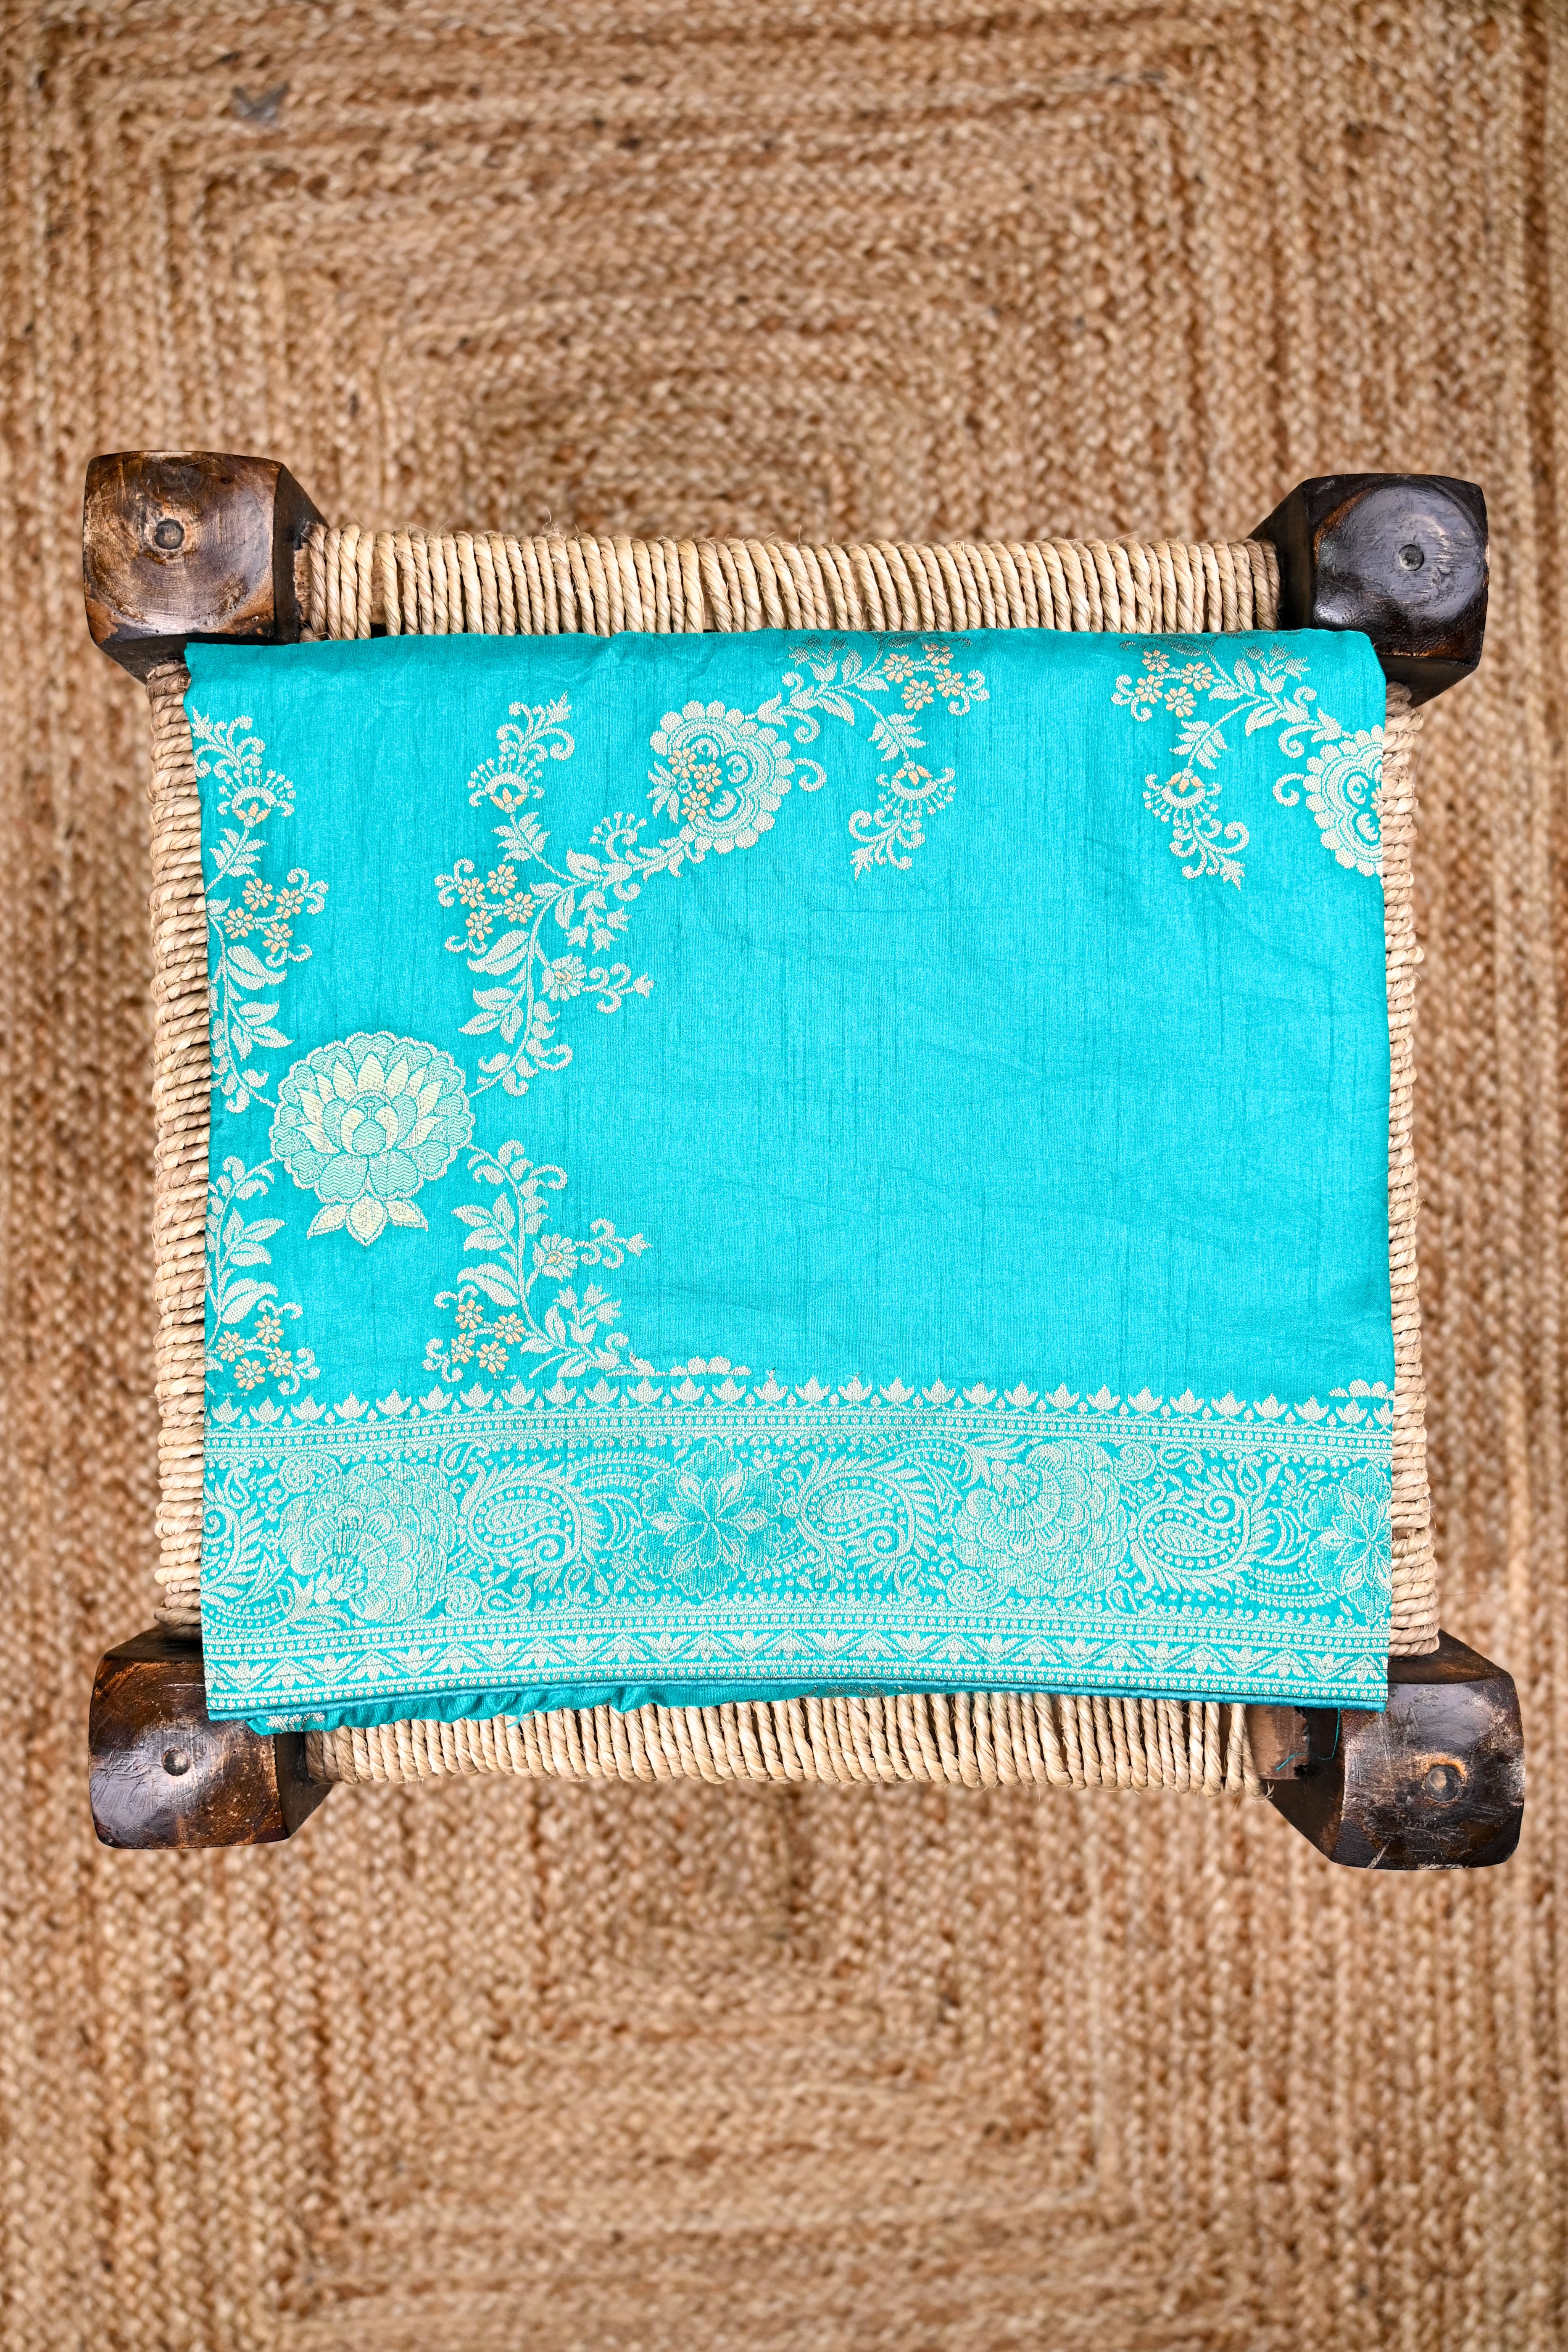 Dola silk saree sea blue color with allover meenakari work, rich pallu, small zari border and running plain blouse.